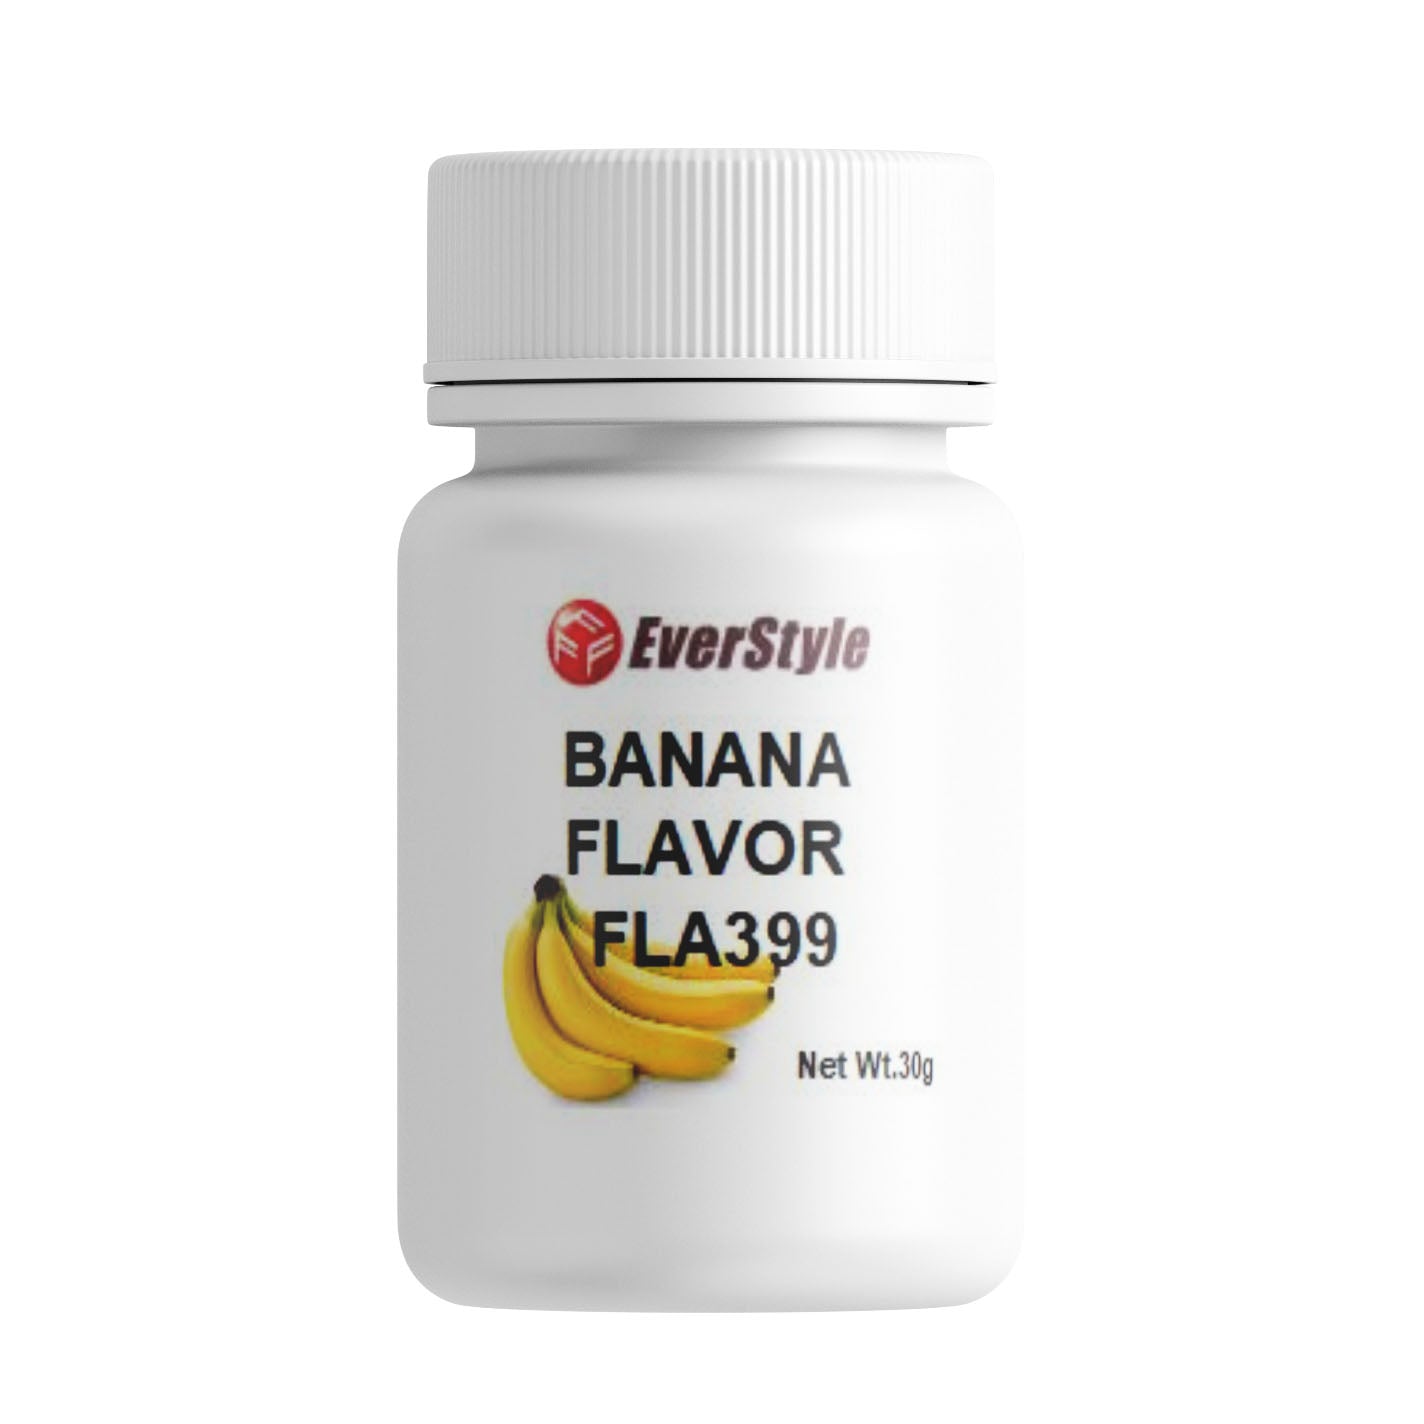 Everstyle Banana Flavor 30g (FLA399)